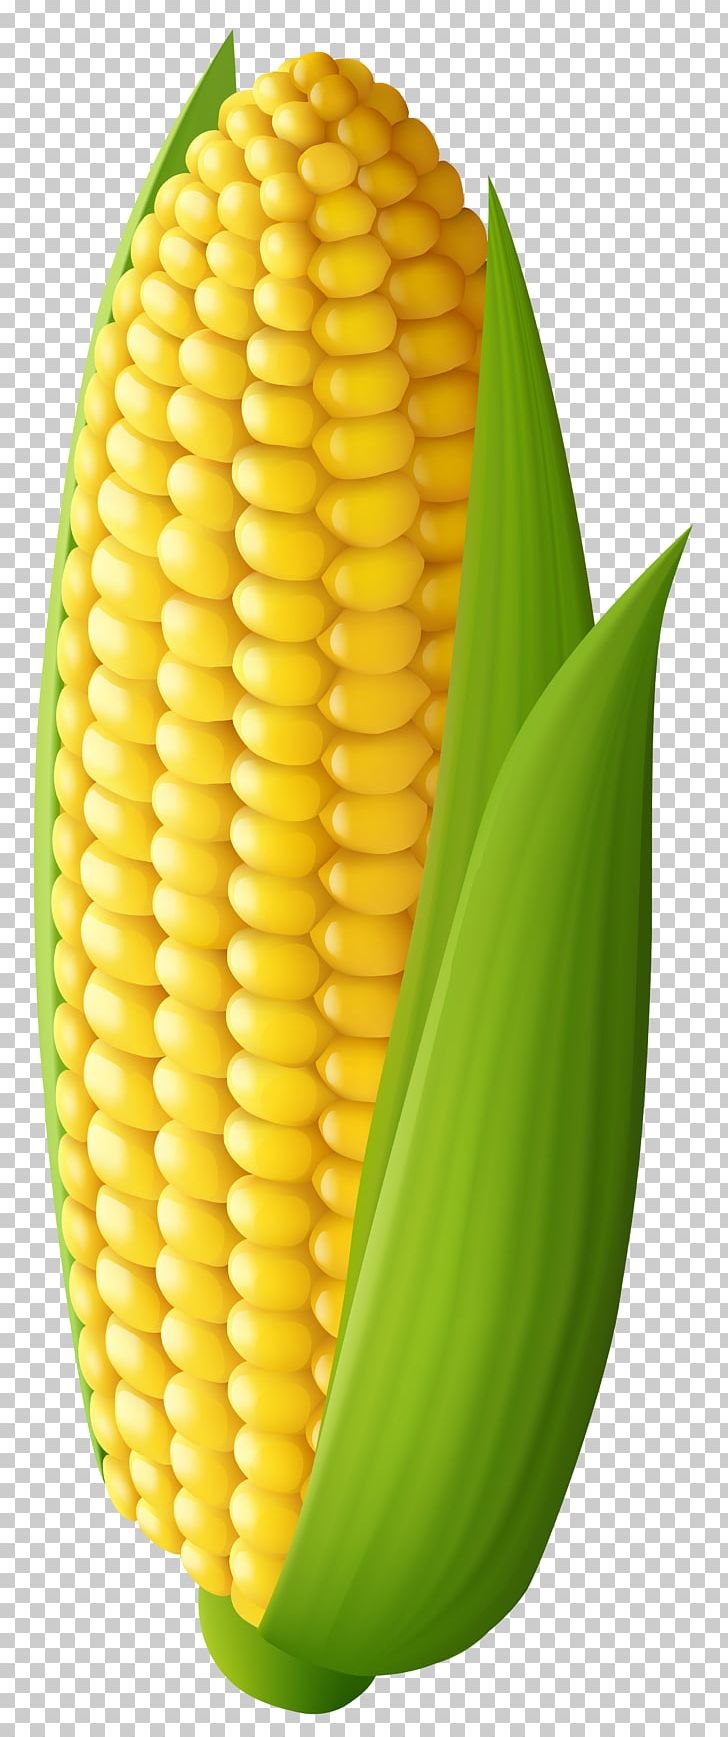 Corn On The Cob Maize Sweet Corn PNG, Clipart, Cauliflower, Clip Art, Commodity, Corncob, Corn Kernels Free PNG Download